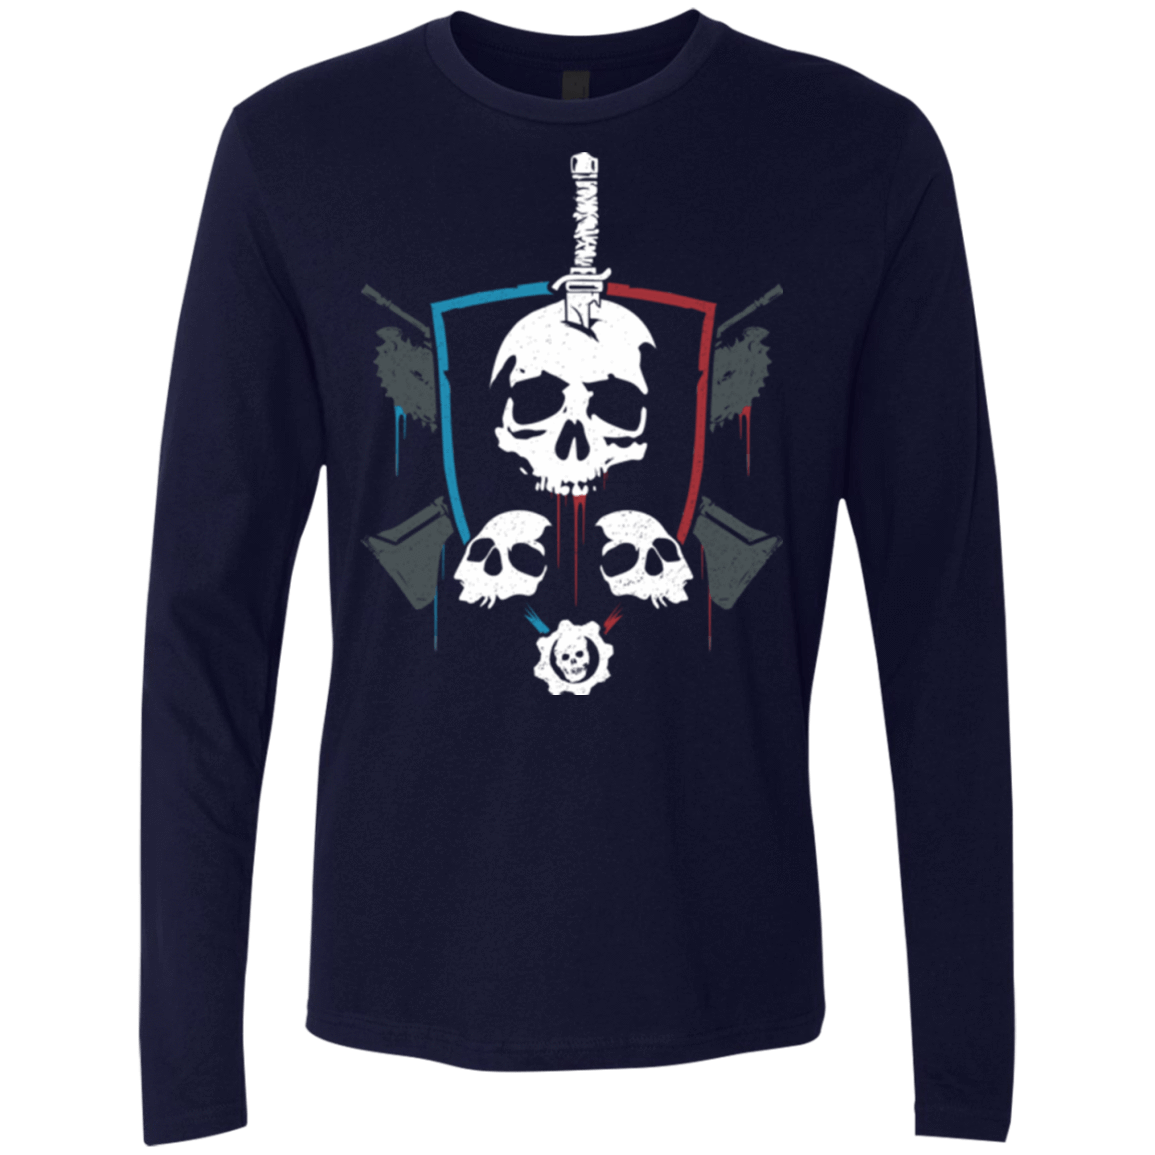 T-Shirts Midnight Navy / Small Gears of War 4 Crest Men's Premium Long Sleeve